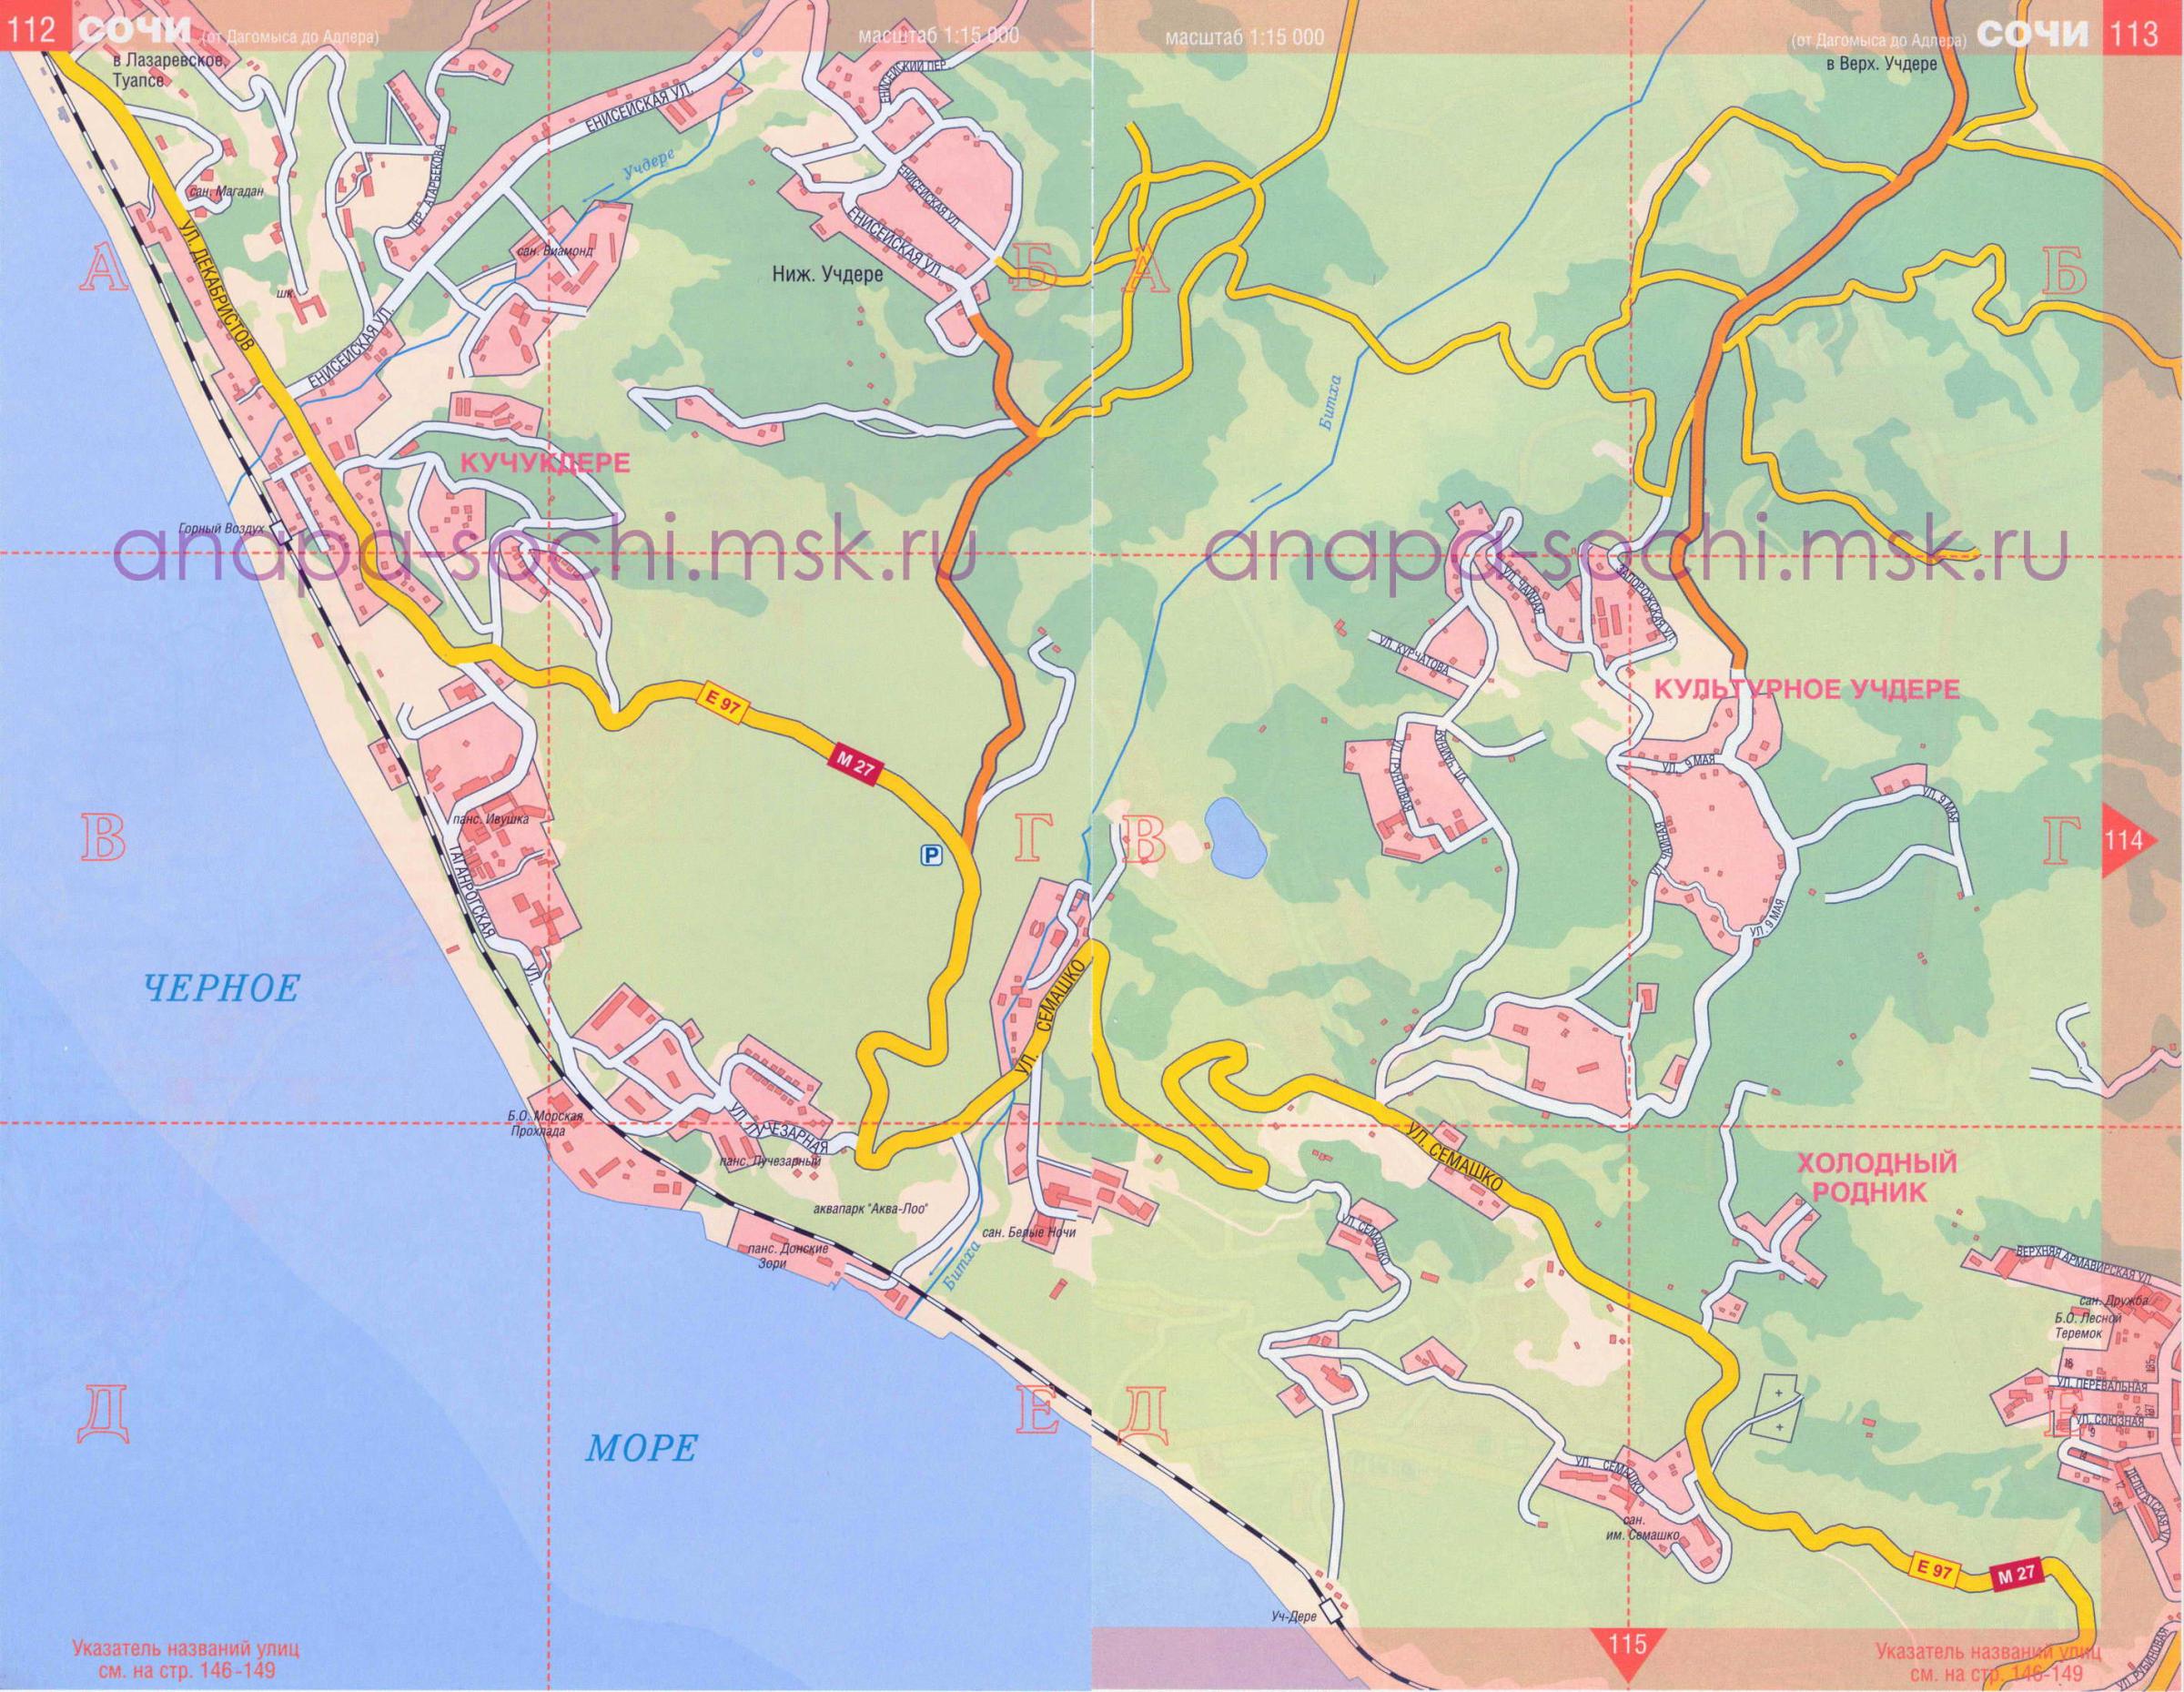 Карта Сочи подробная. Большая подробная карта Сочи. Карта побережья Сочи,A0 -